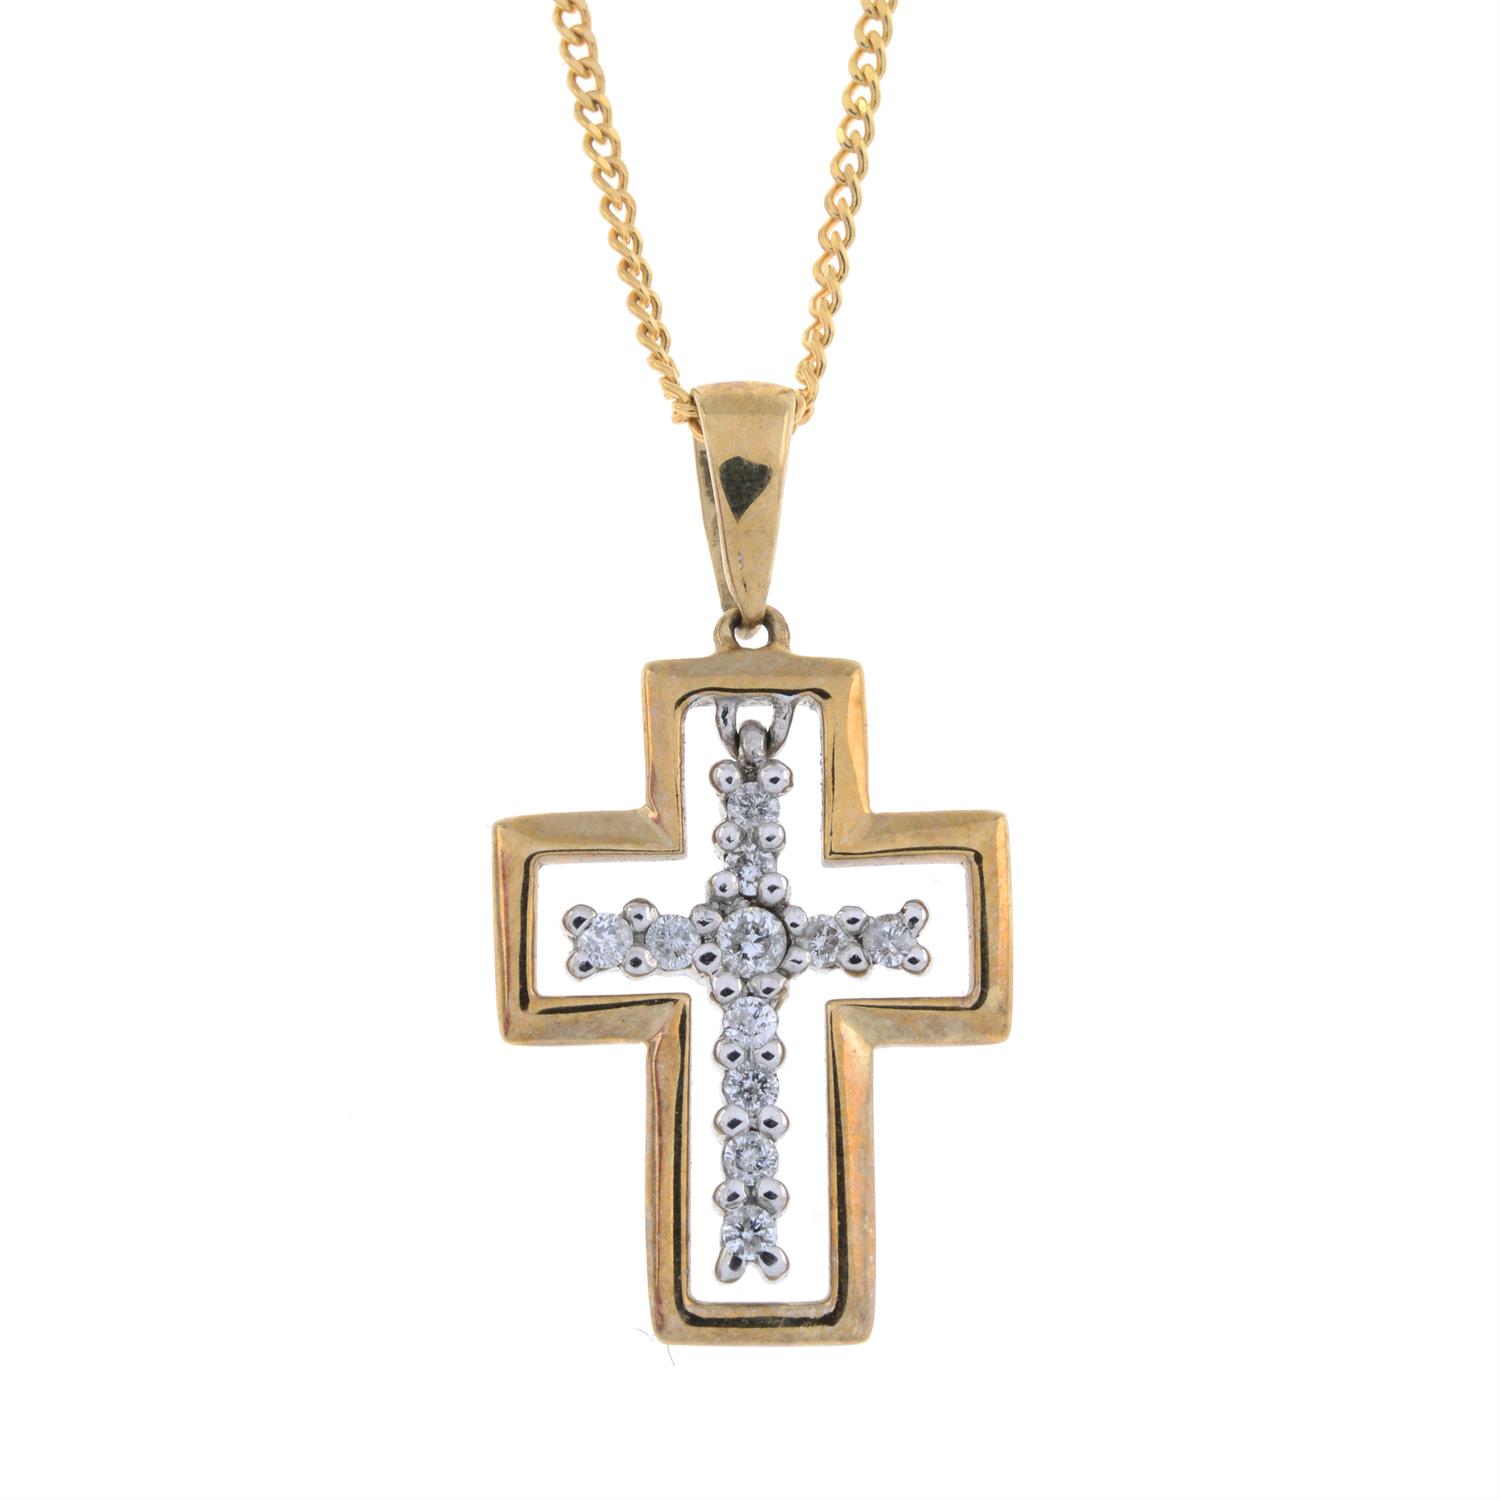 9ct gold diamond cross pendant, with chain